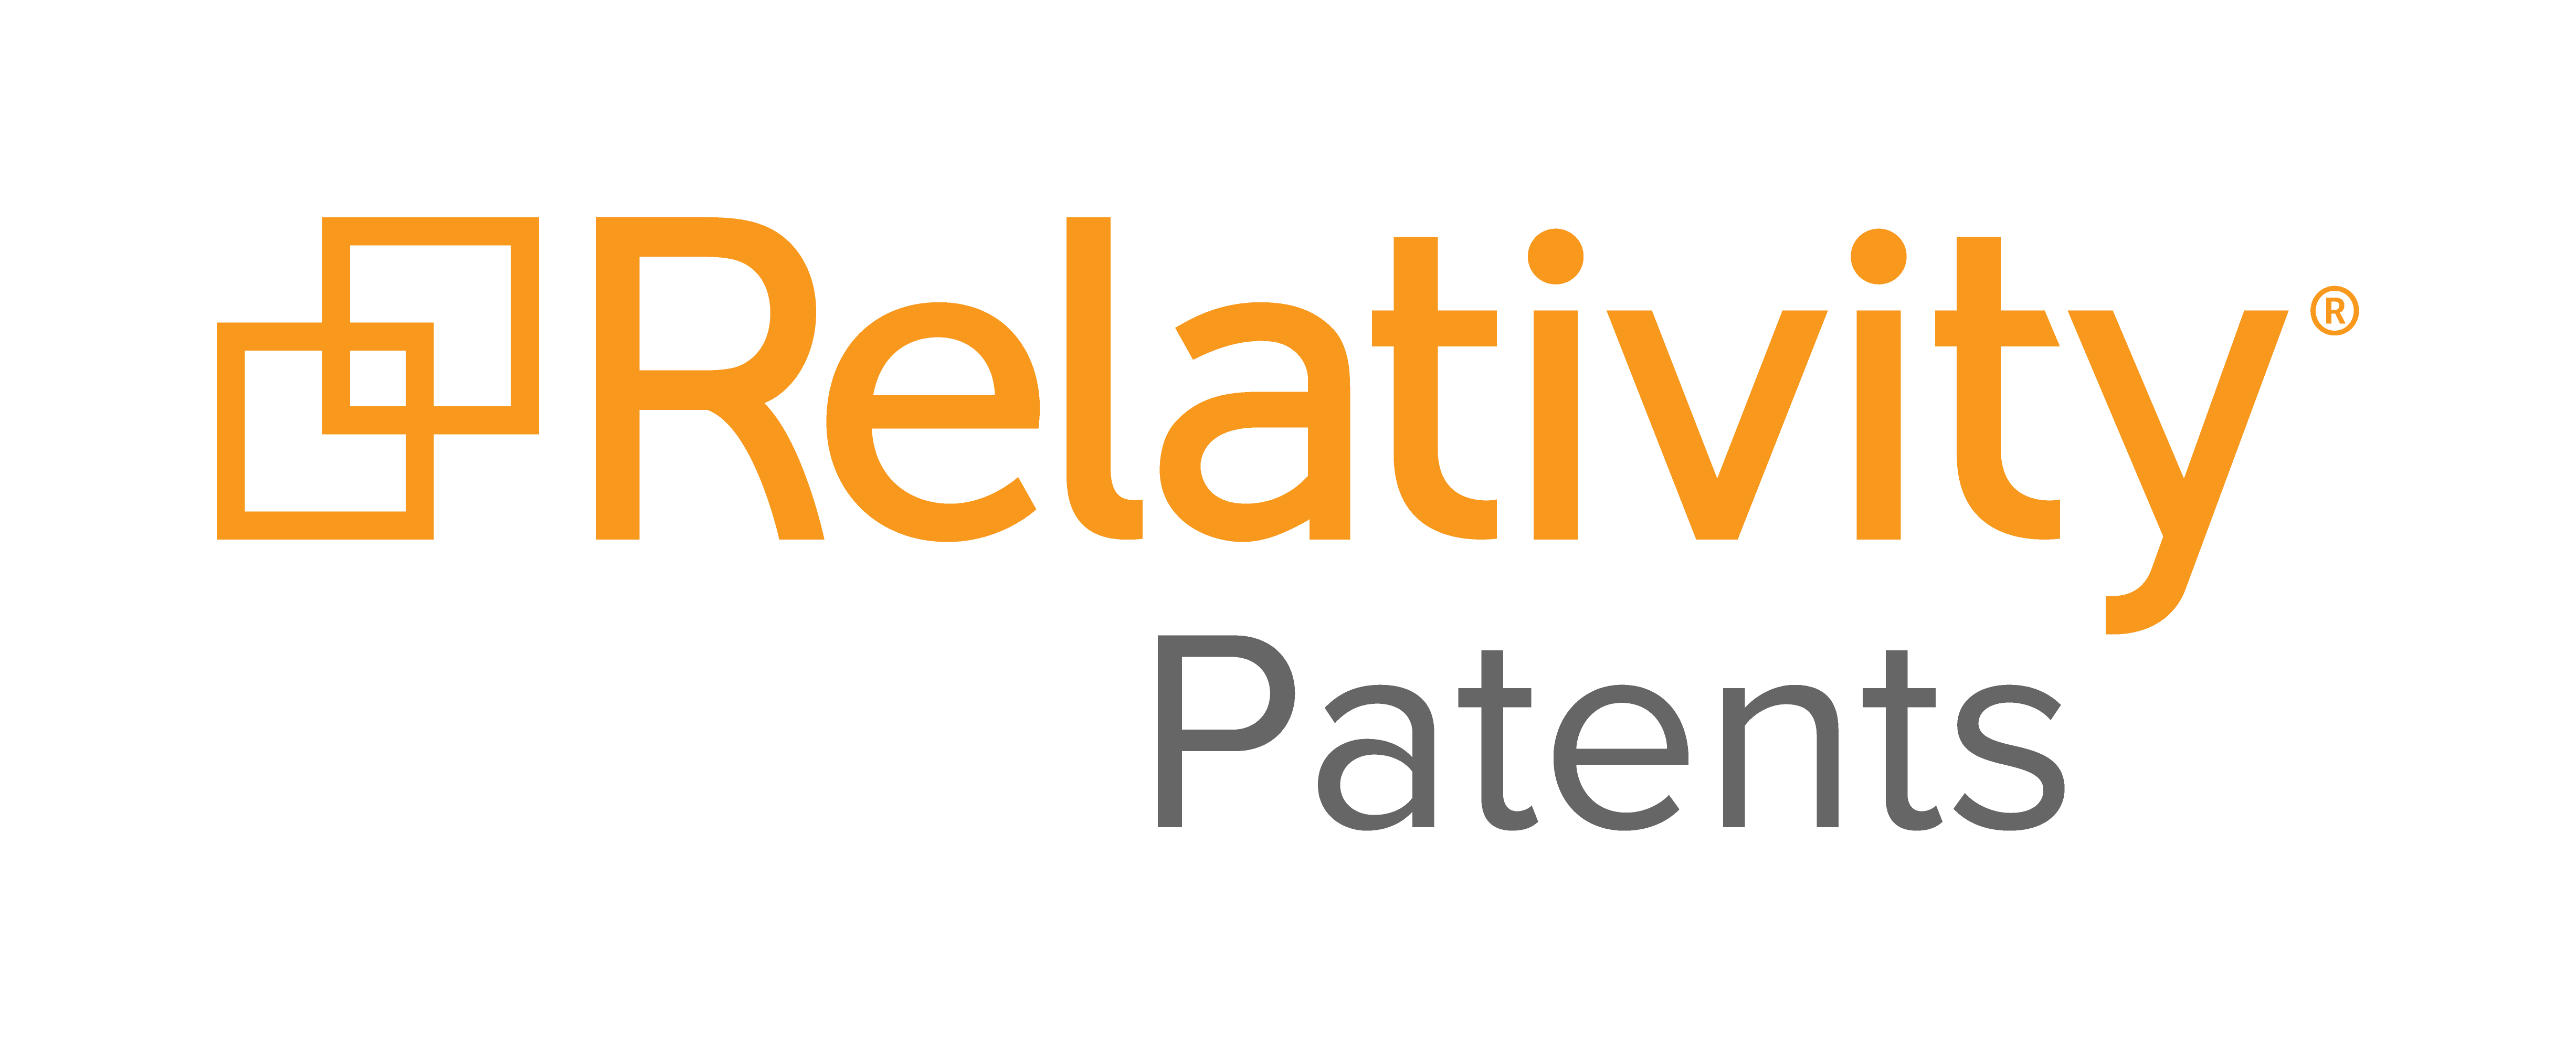 Relativity Patents